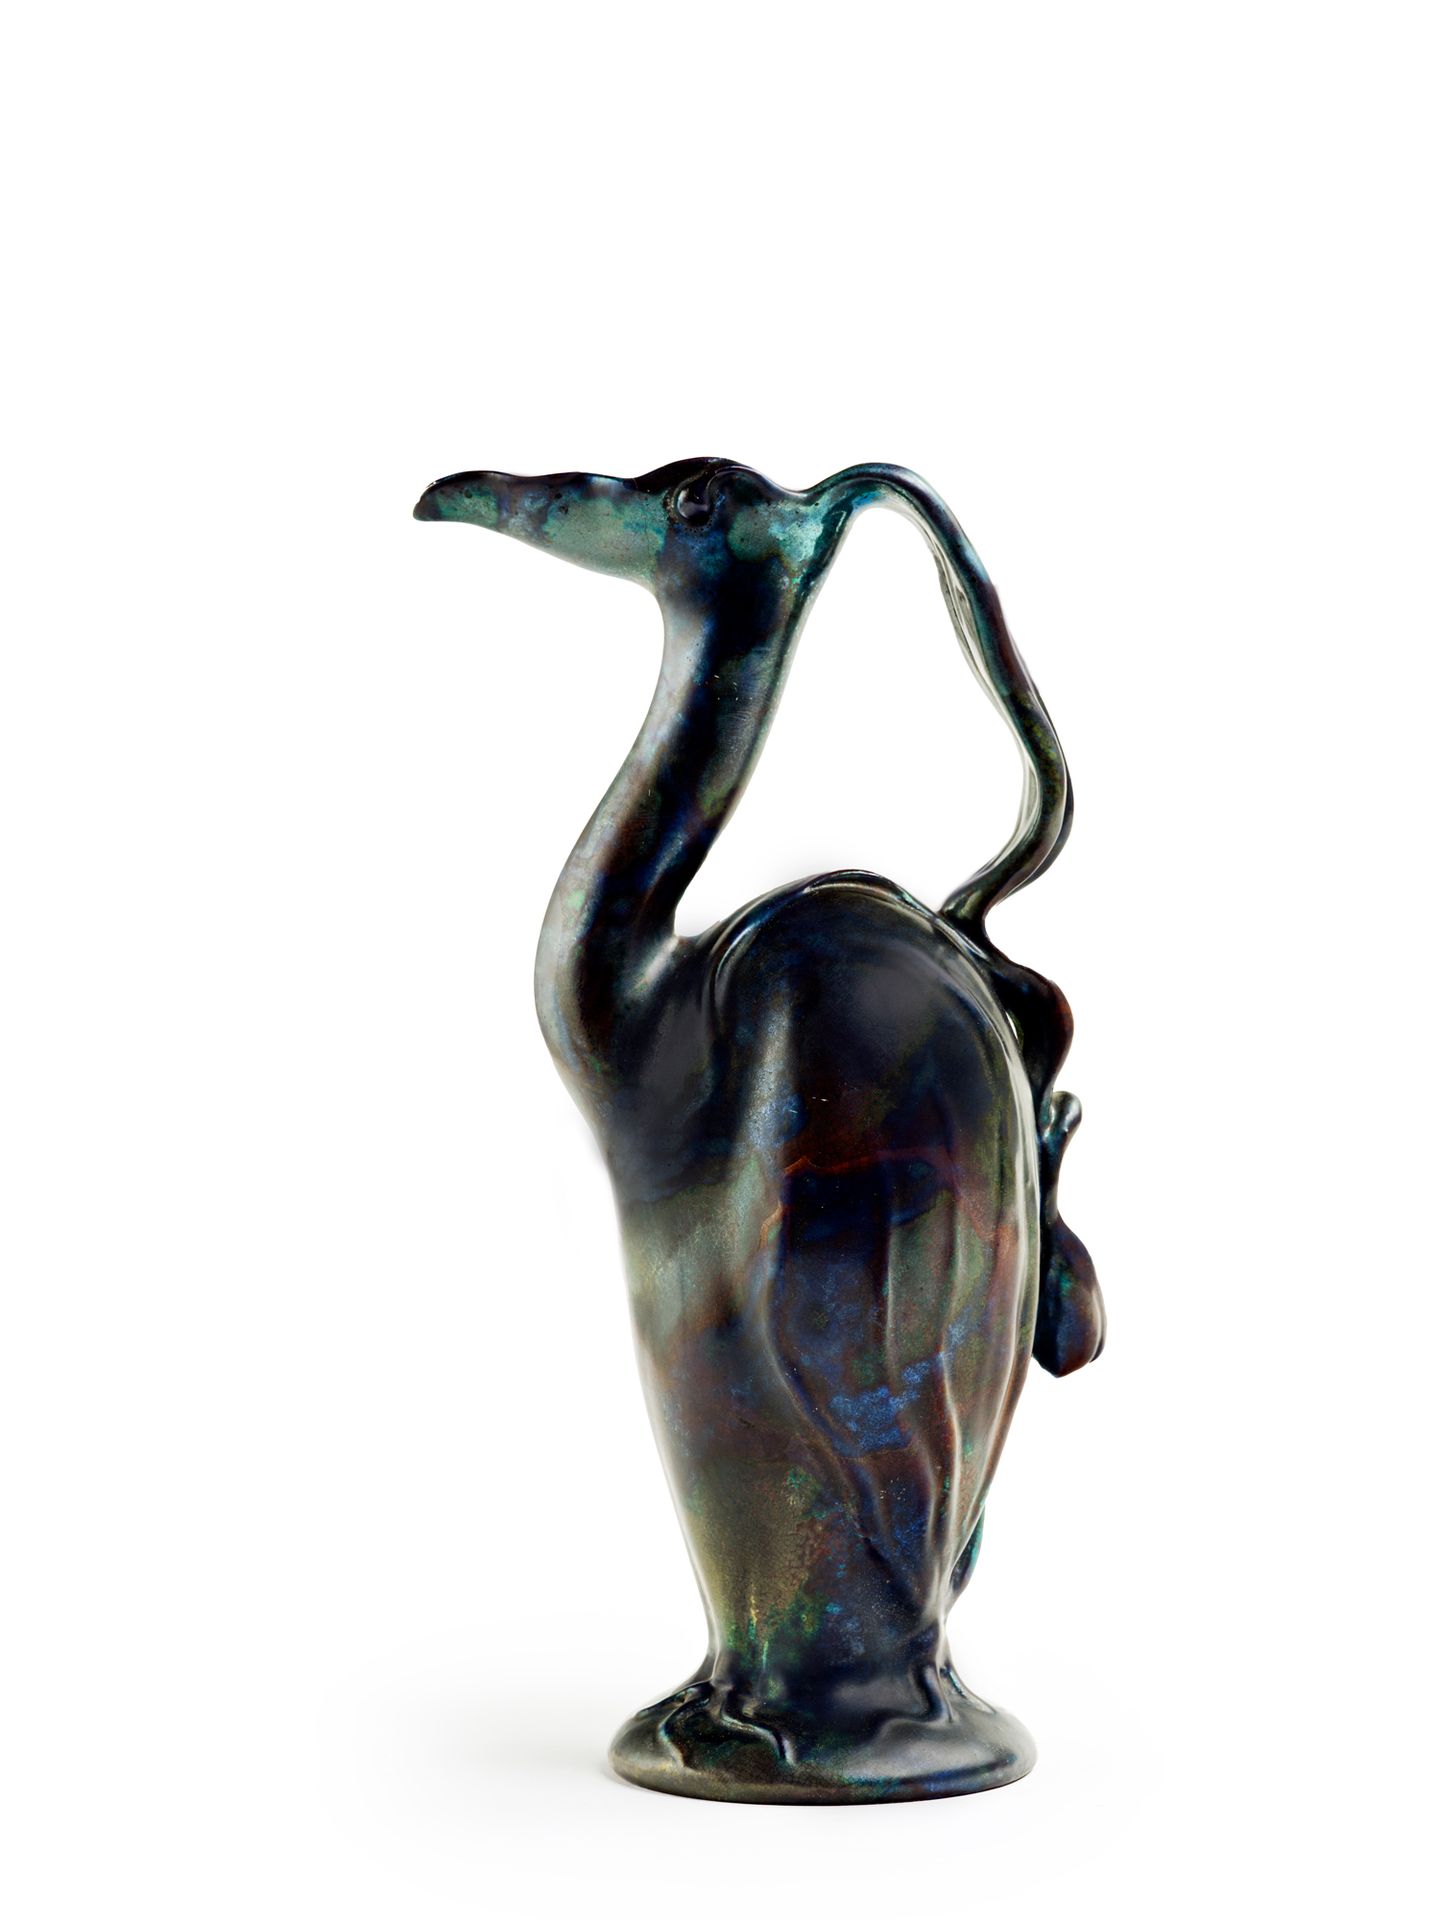 Vilmos ZSOLNAY (1840-1900) 一件罕见的带植物手柄的变体瓷釉陶壶，壶身施曙红釉，呈五彩蓝绿相间的铜色调。
签有 "Zsolnay Pec&hellip;